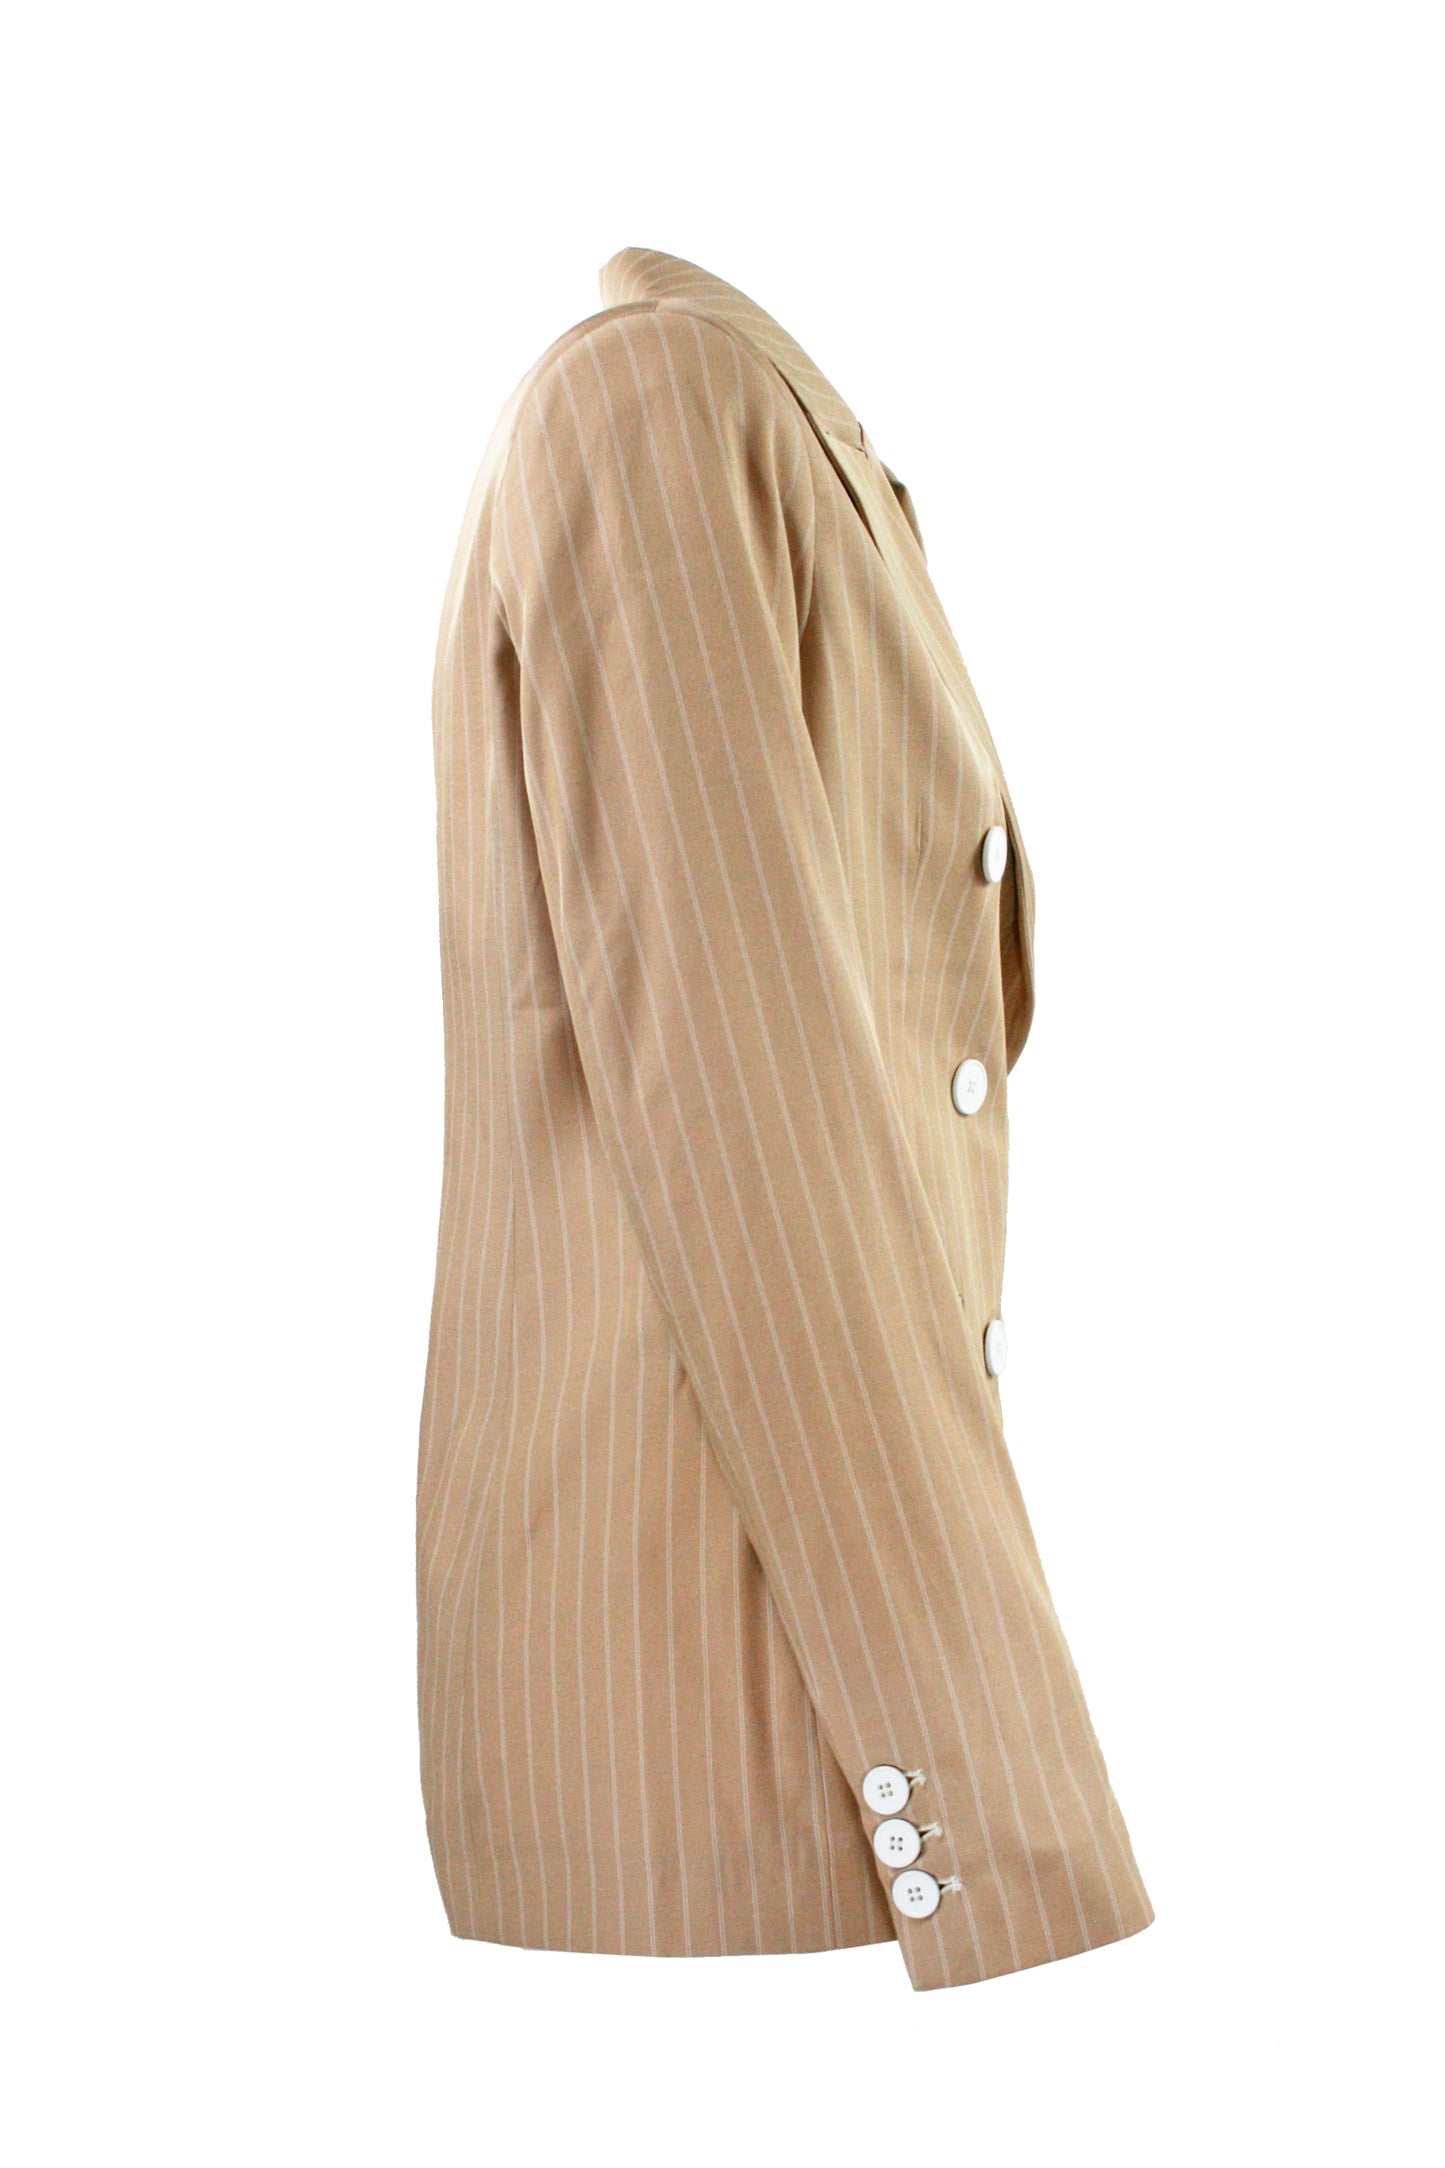 GIULIETTE BROWN Beige Pinstripe Double-Breasted Jacket